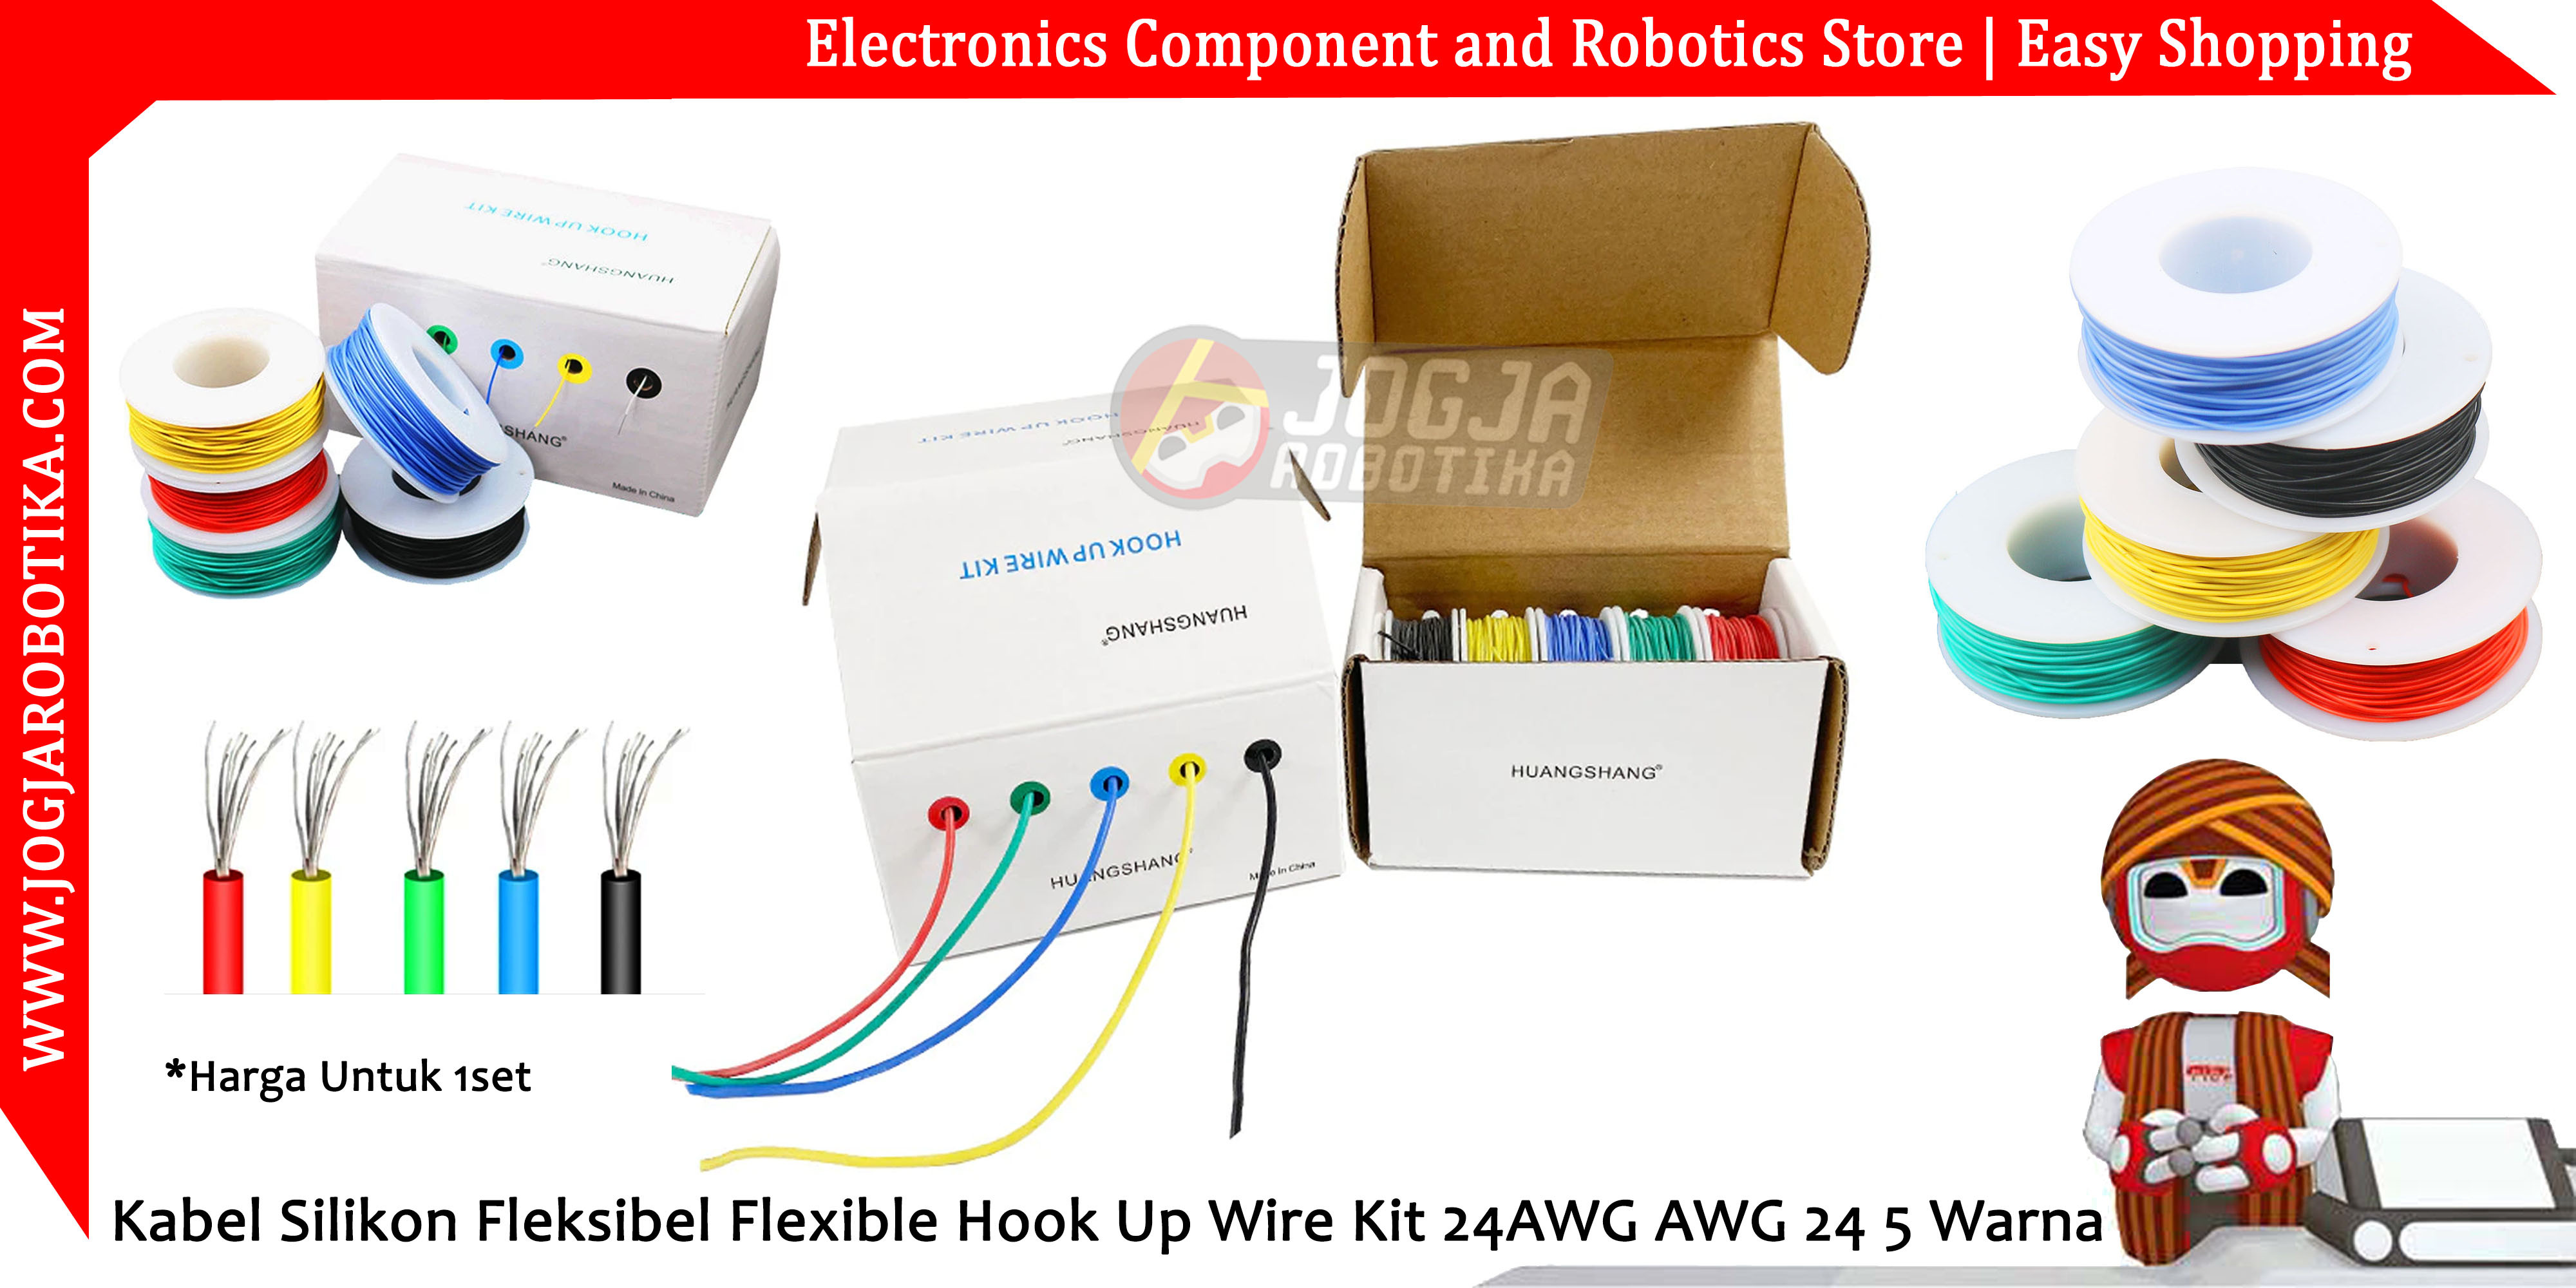 Kabel Silikon Fleksibel Flexible Hook Up Wire Kit 24AWG AWG 24 5 Warna -  Toko Komponen Elektronik , Listrik , LED dan Robotika